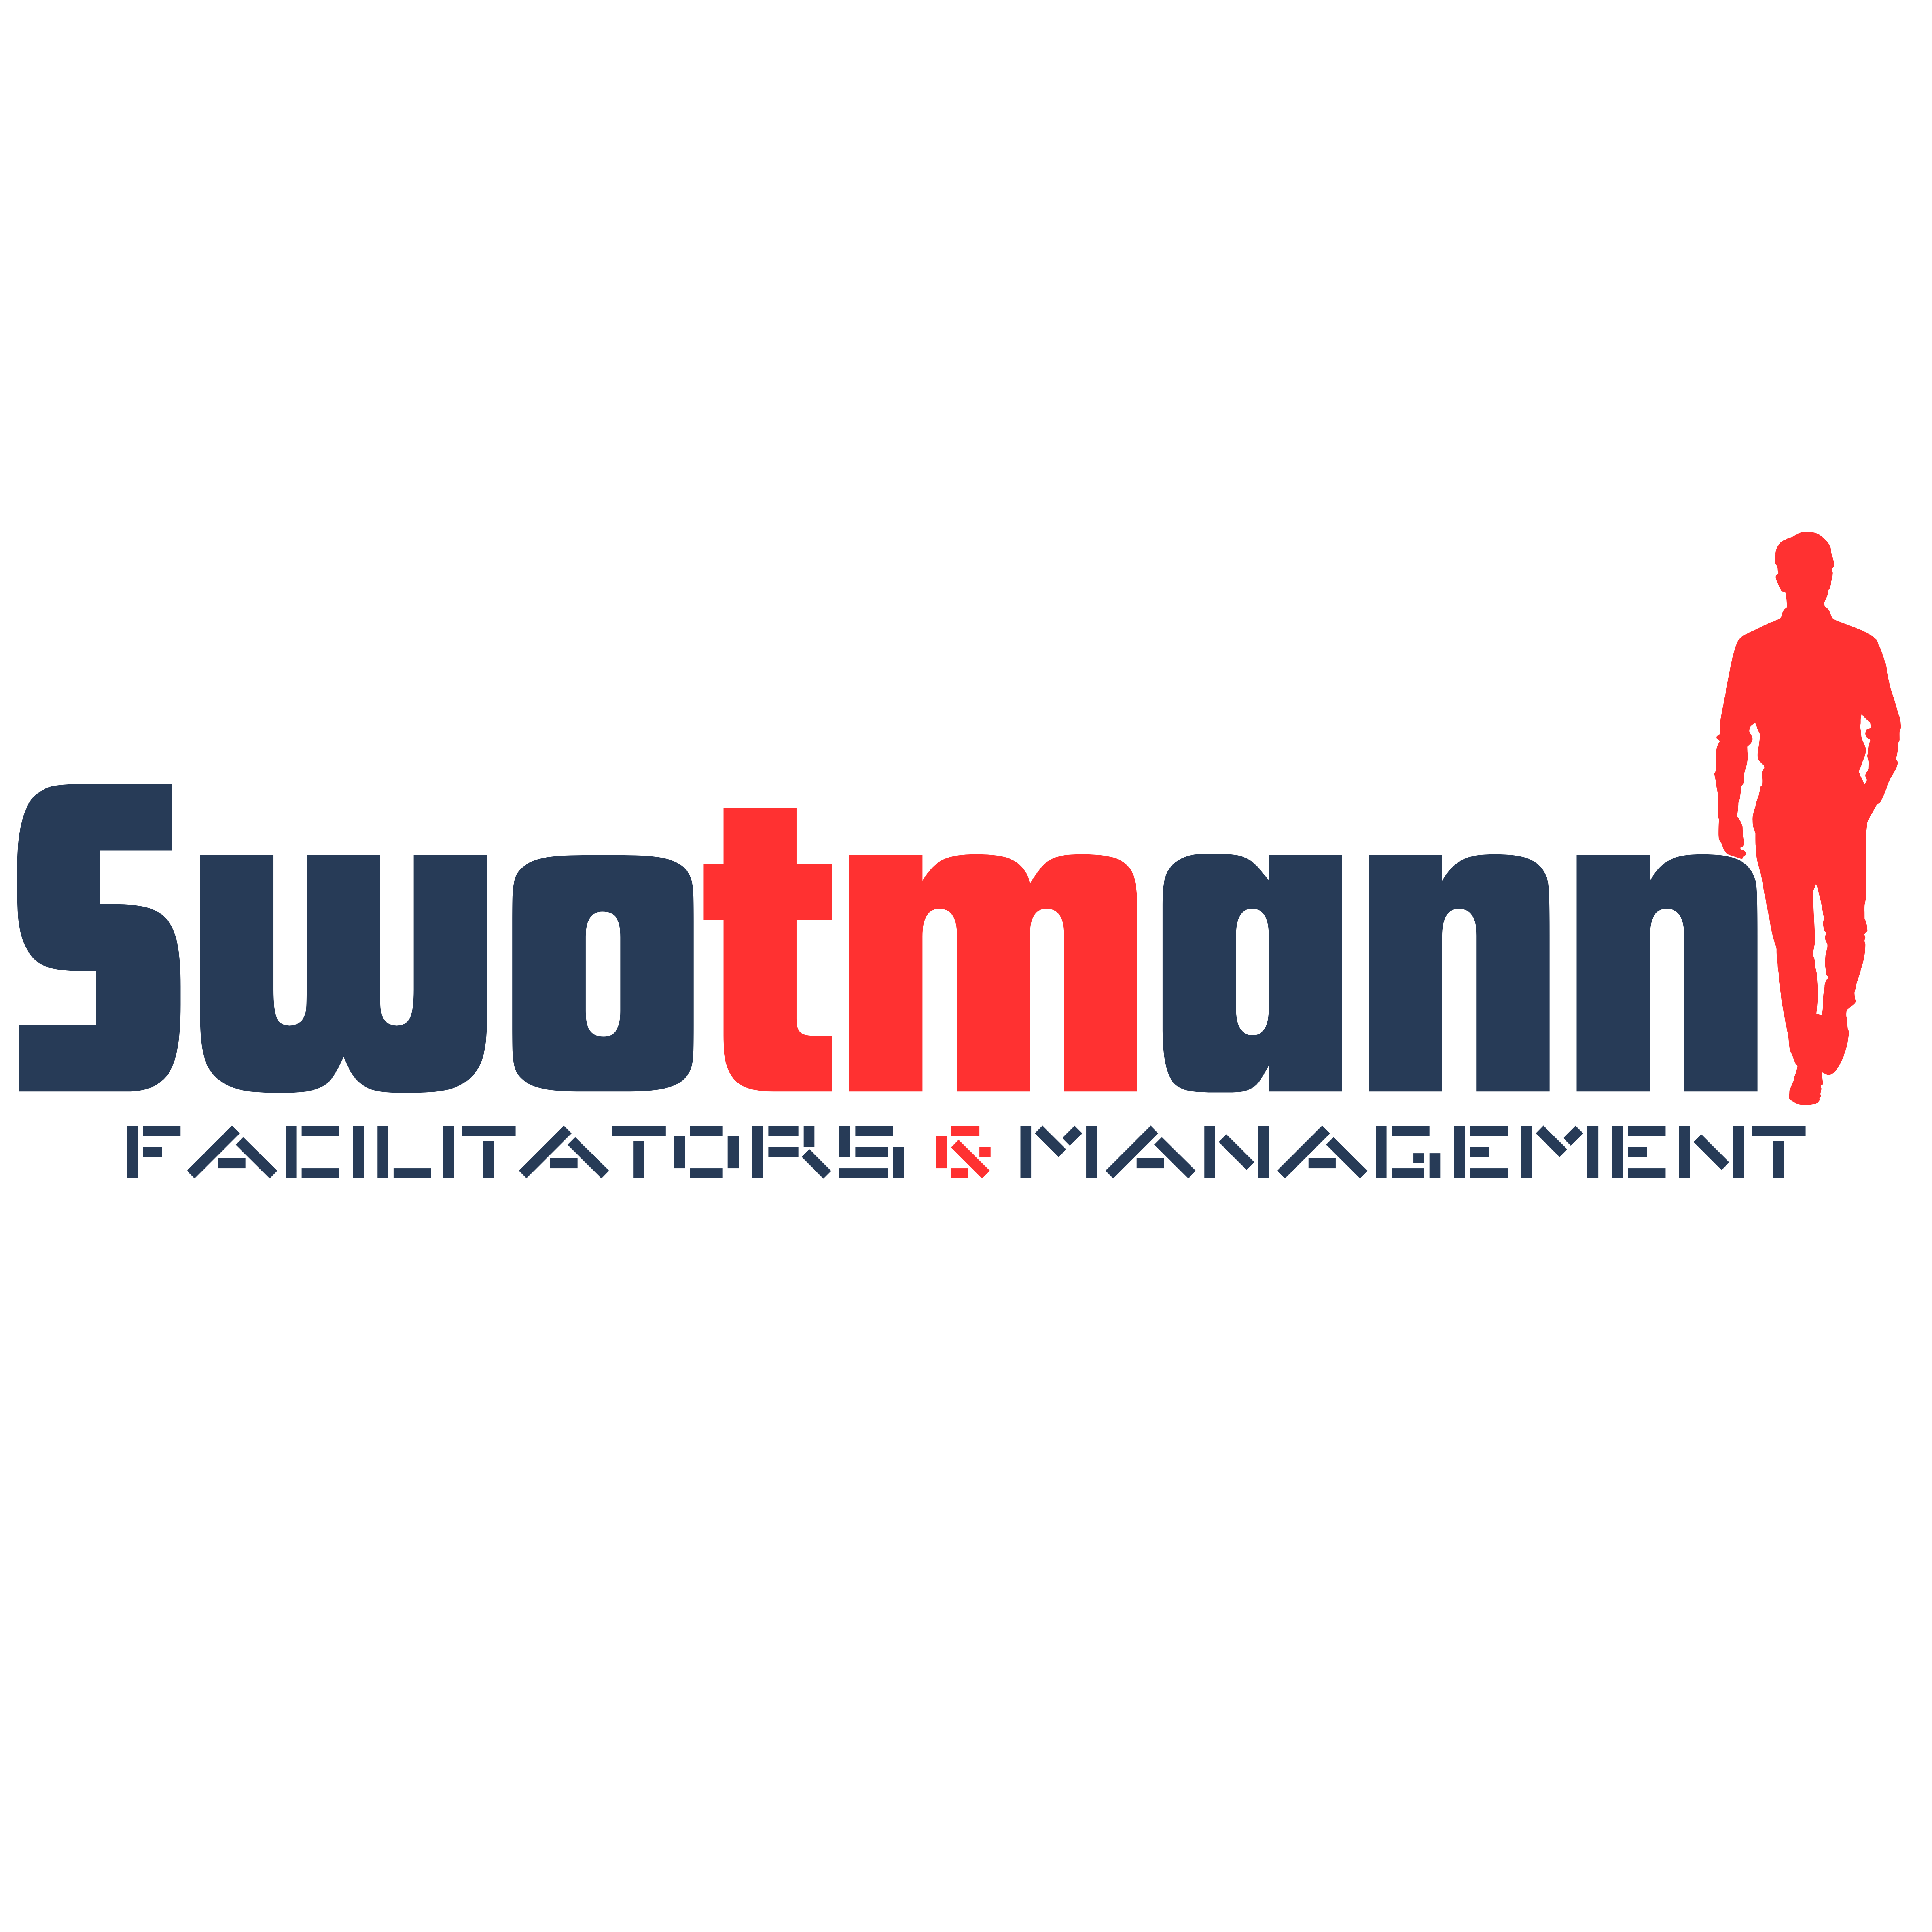 Swotmann Facilitators & Management